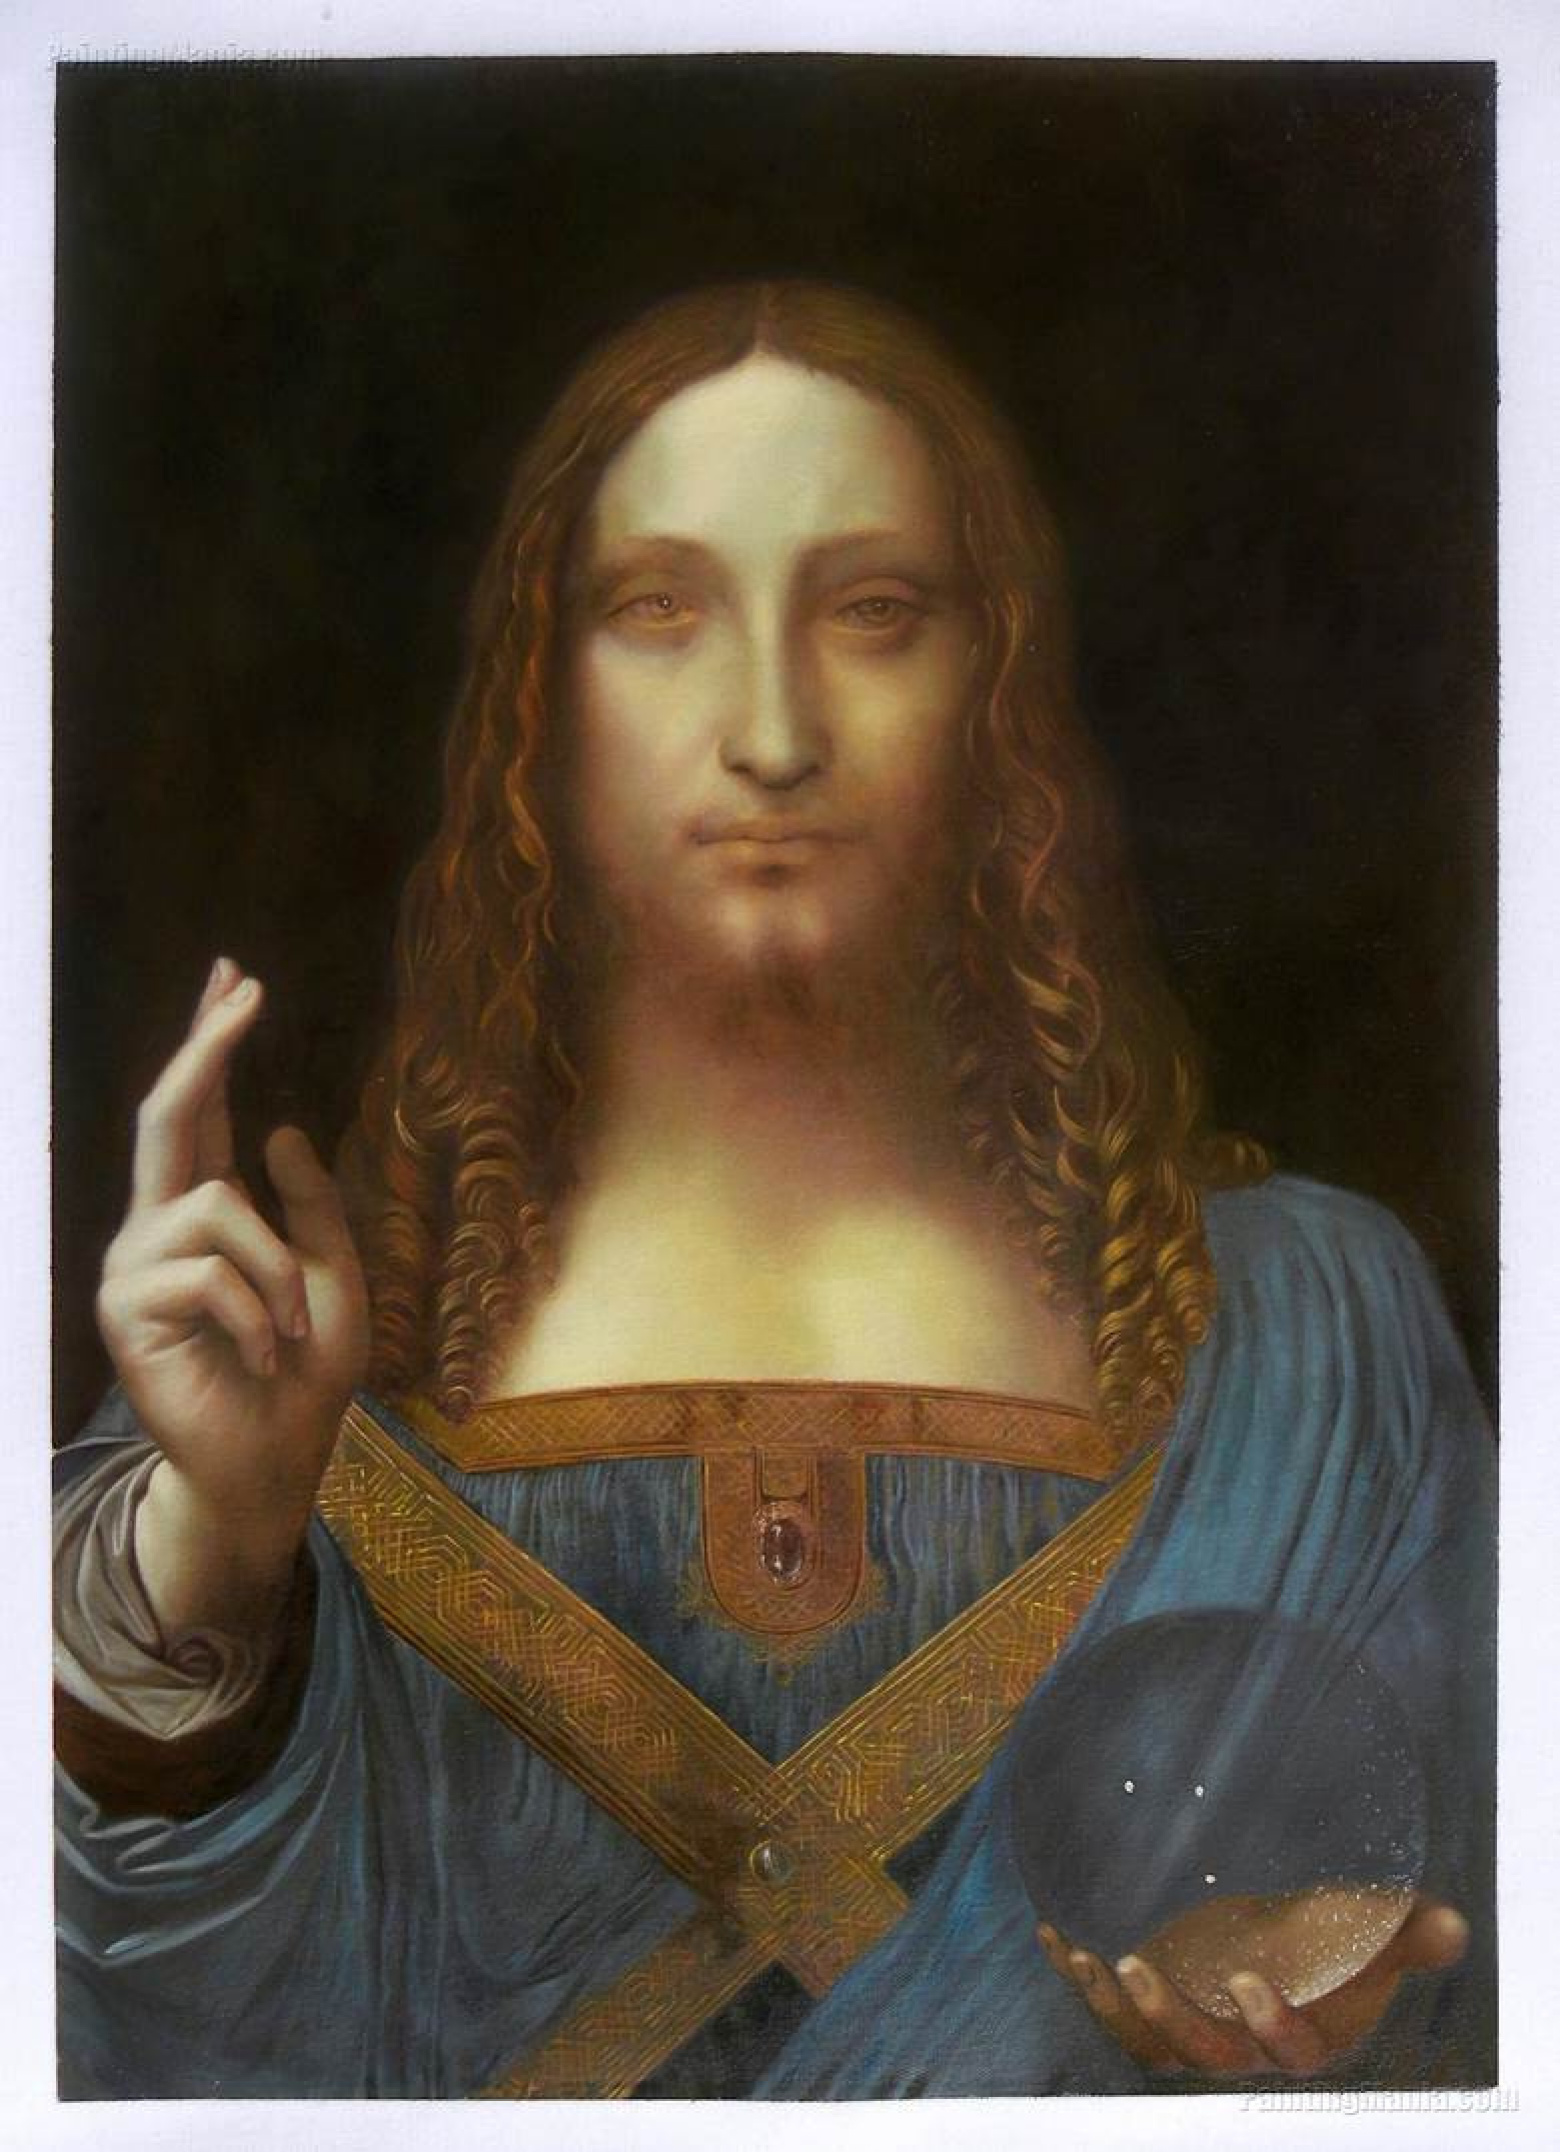 Leonardo Da Vinci Paintings: A Brief Guide To 8 Famous Works